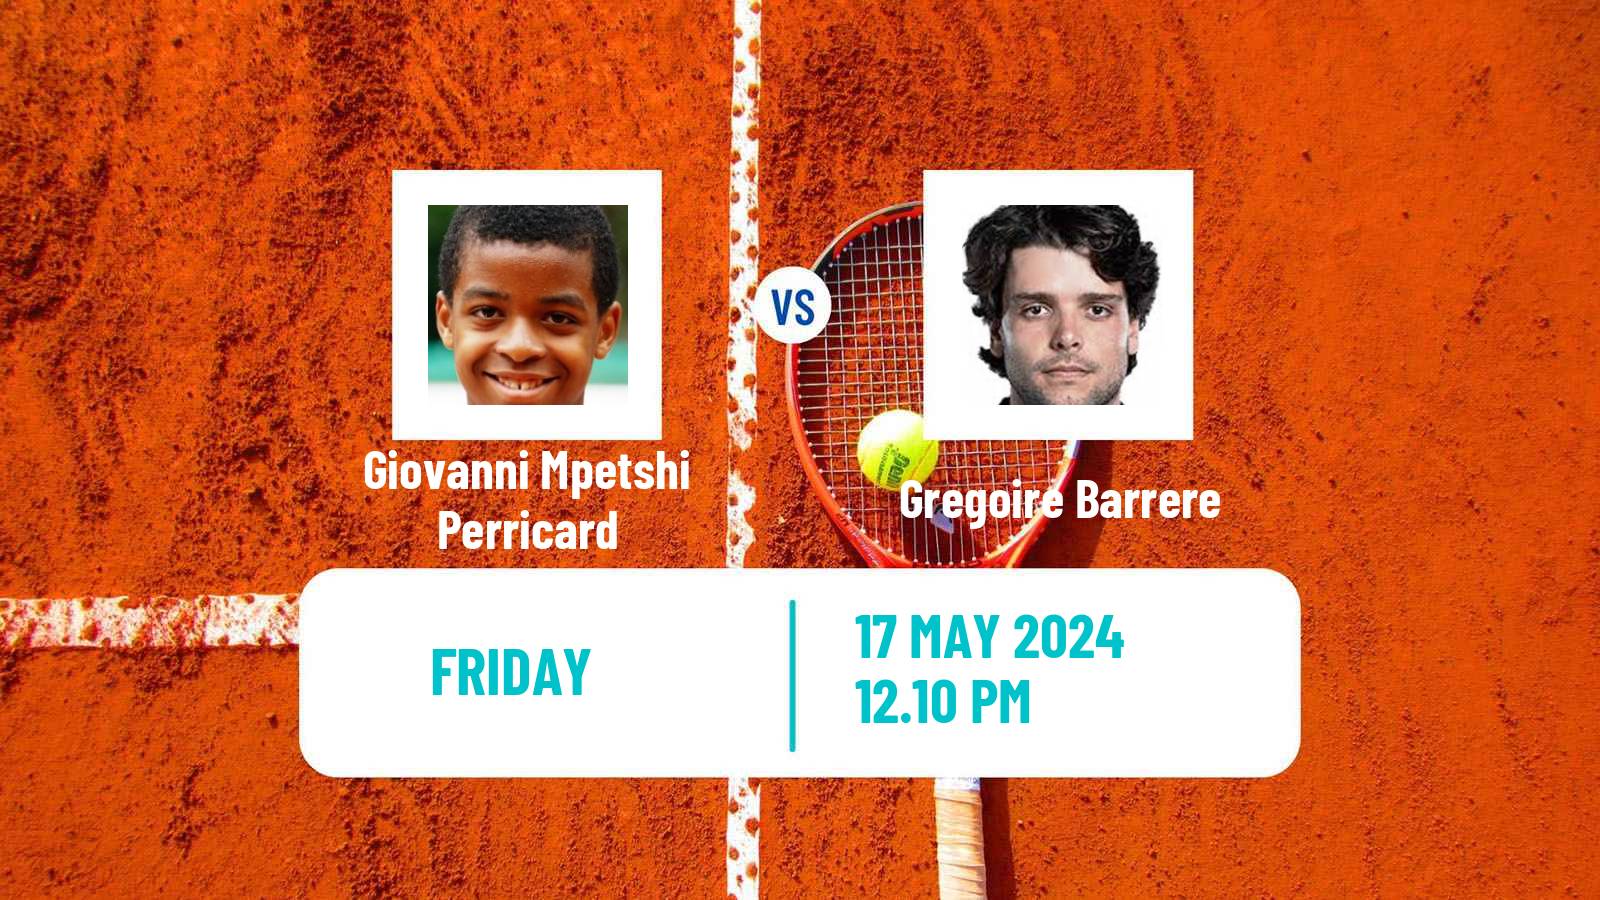 Tennis Bordeaux Challenger Men Giovanni Mpetshi Perricard - Gregoire Barrere